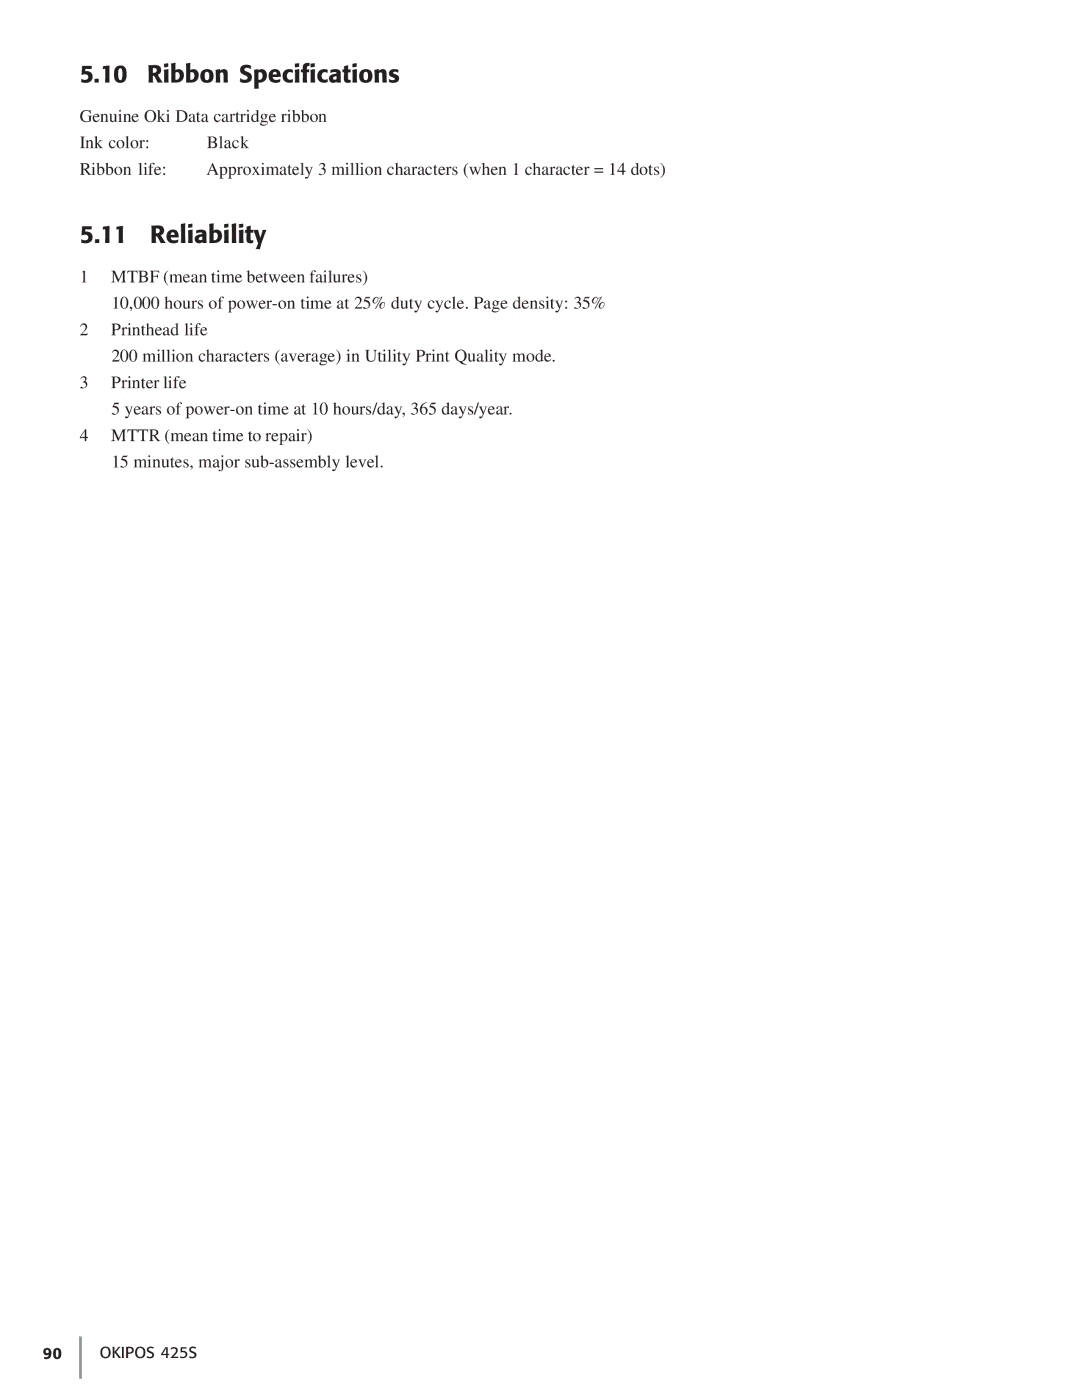 Oki 425S manual Ribbon Specifications, Reliability 